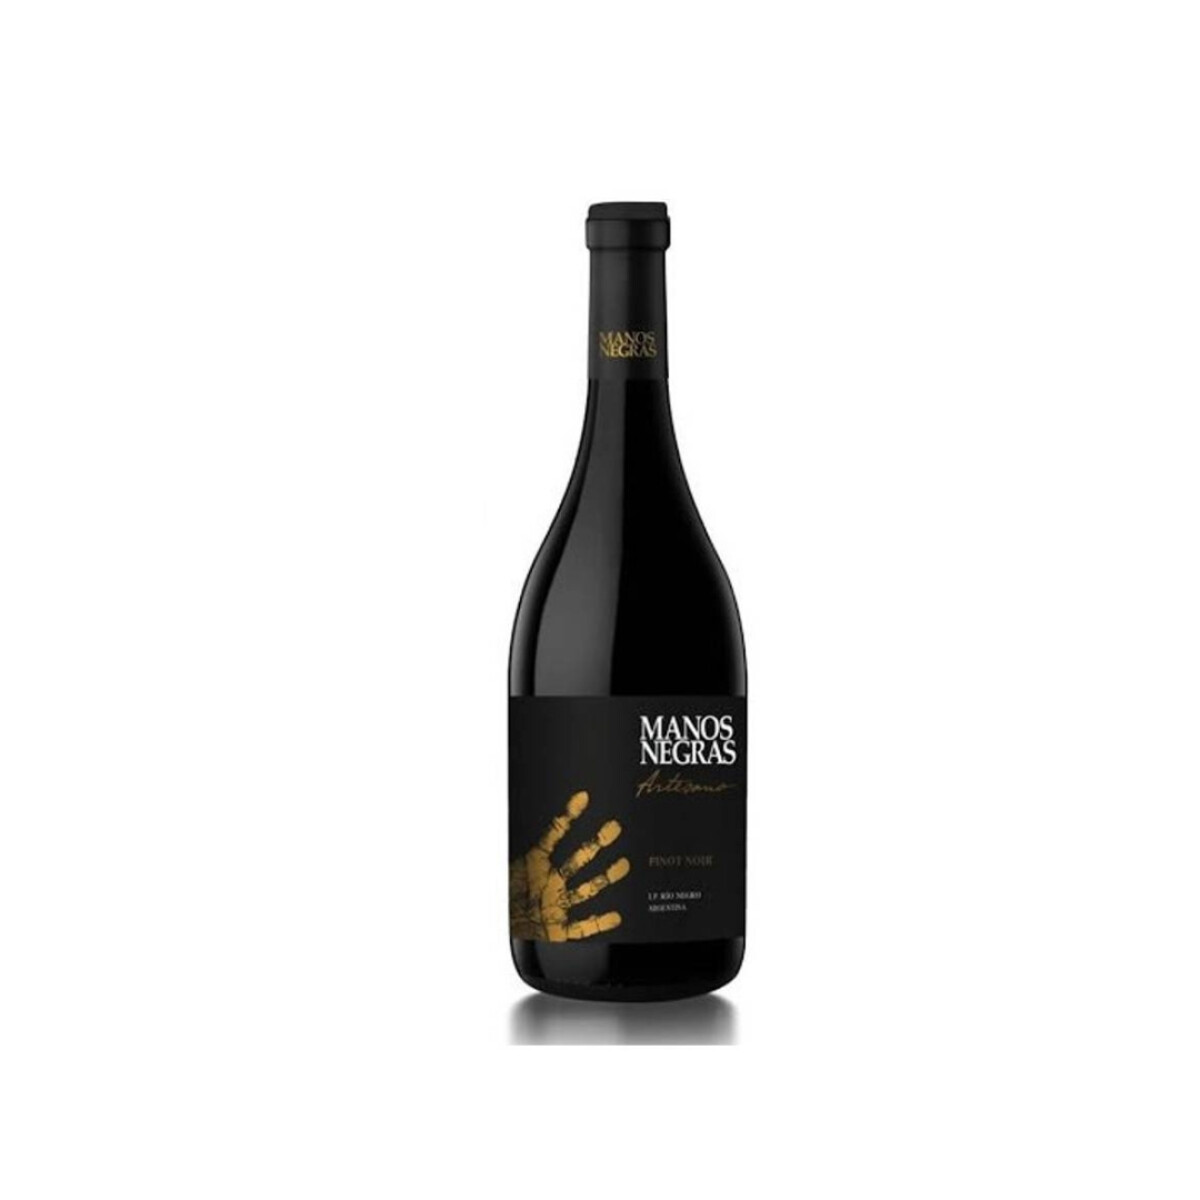 Manos Negras Artesano Pinot Noir 